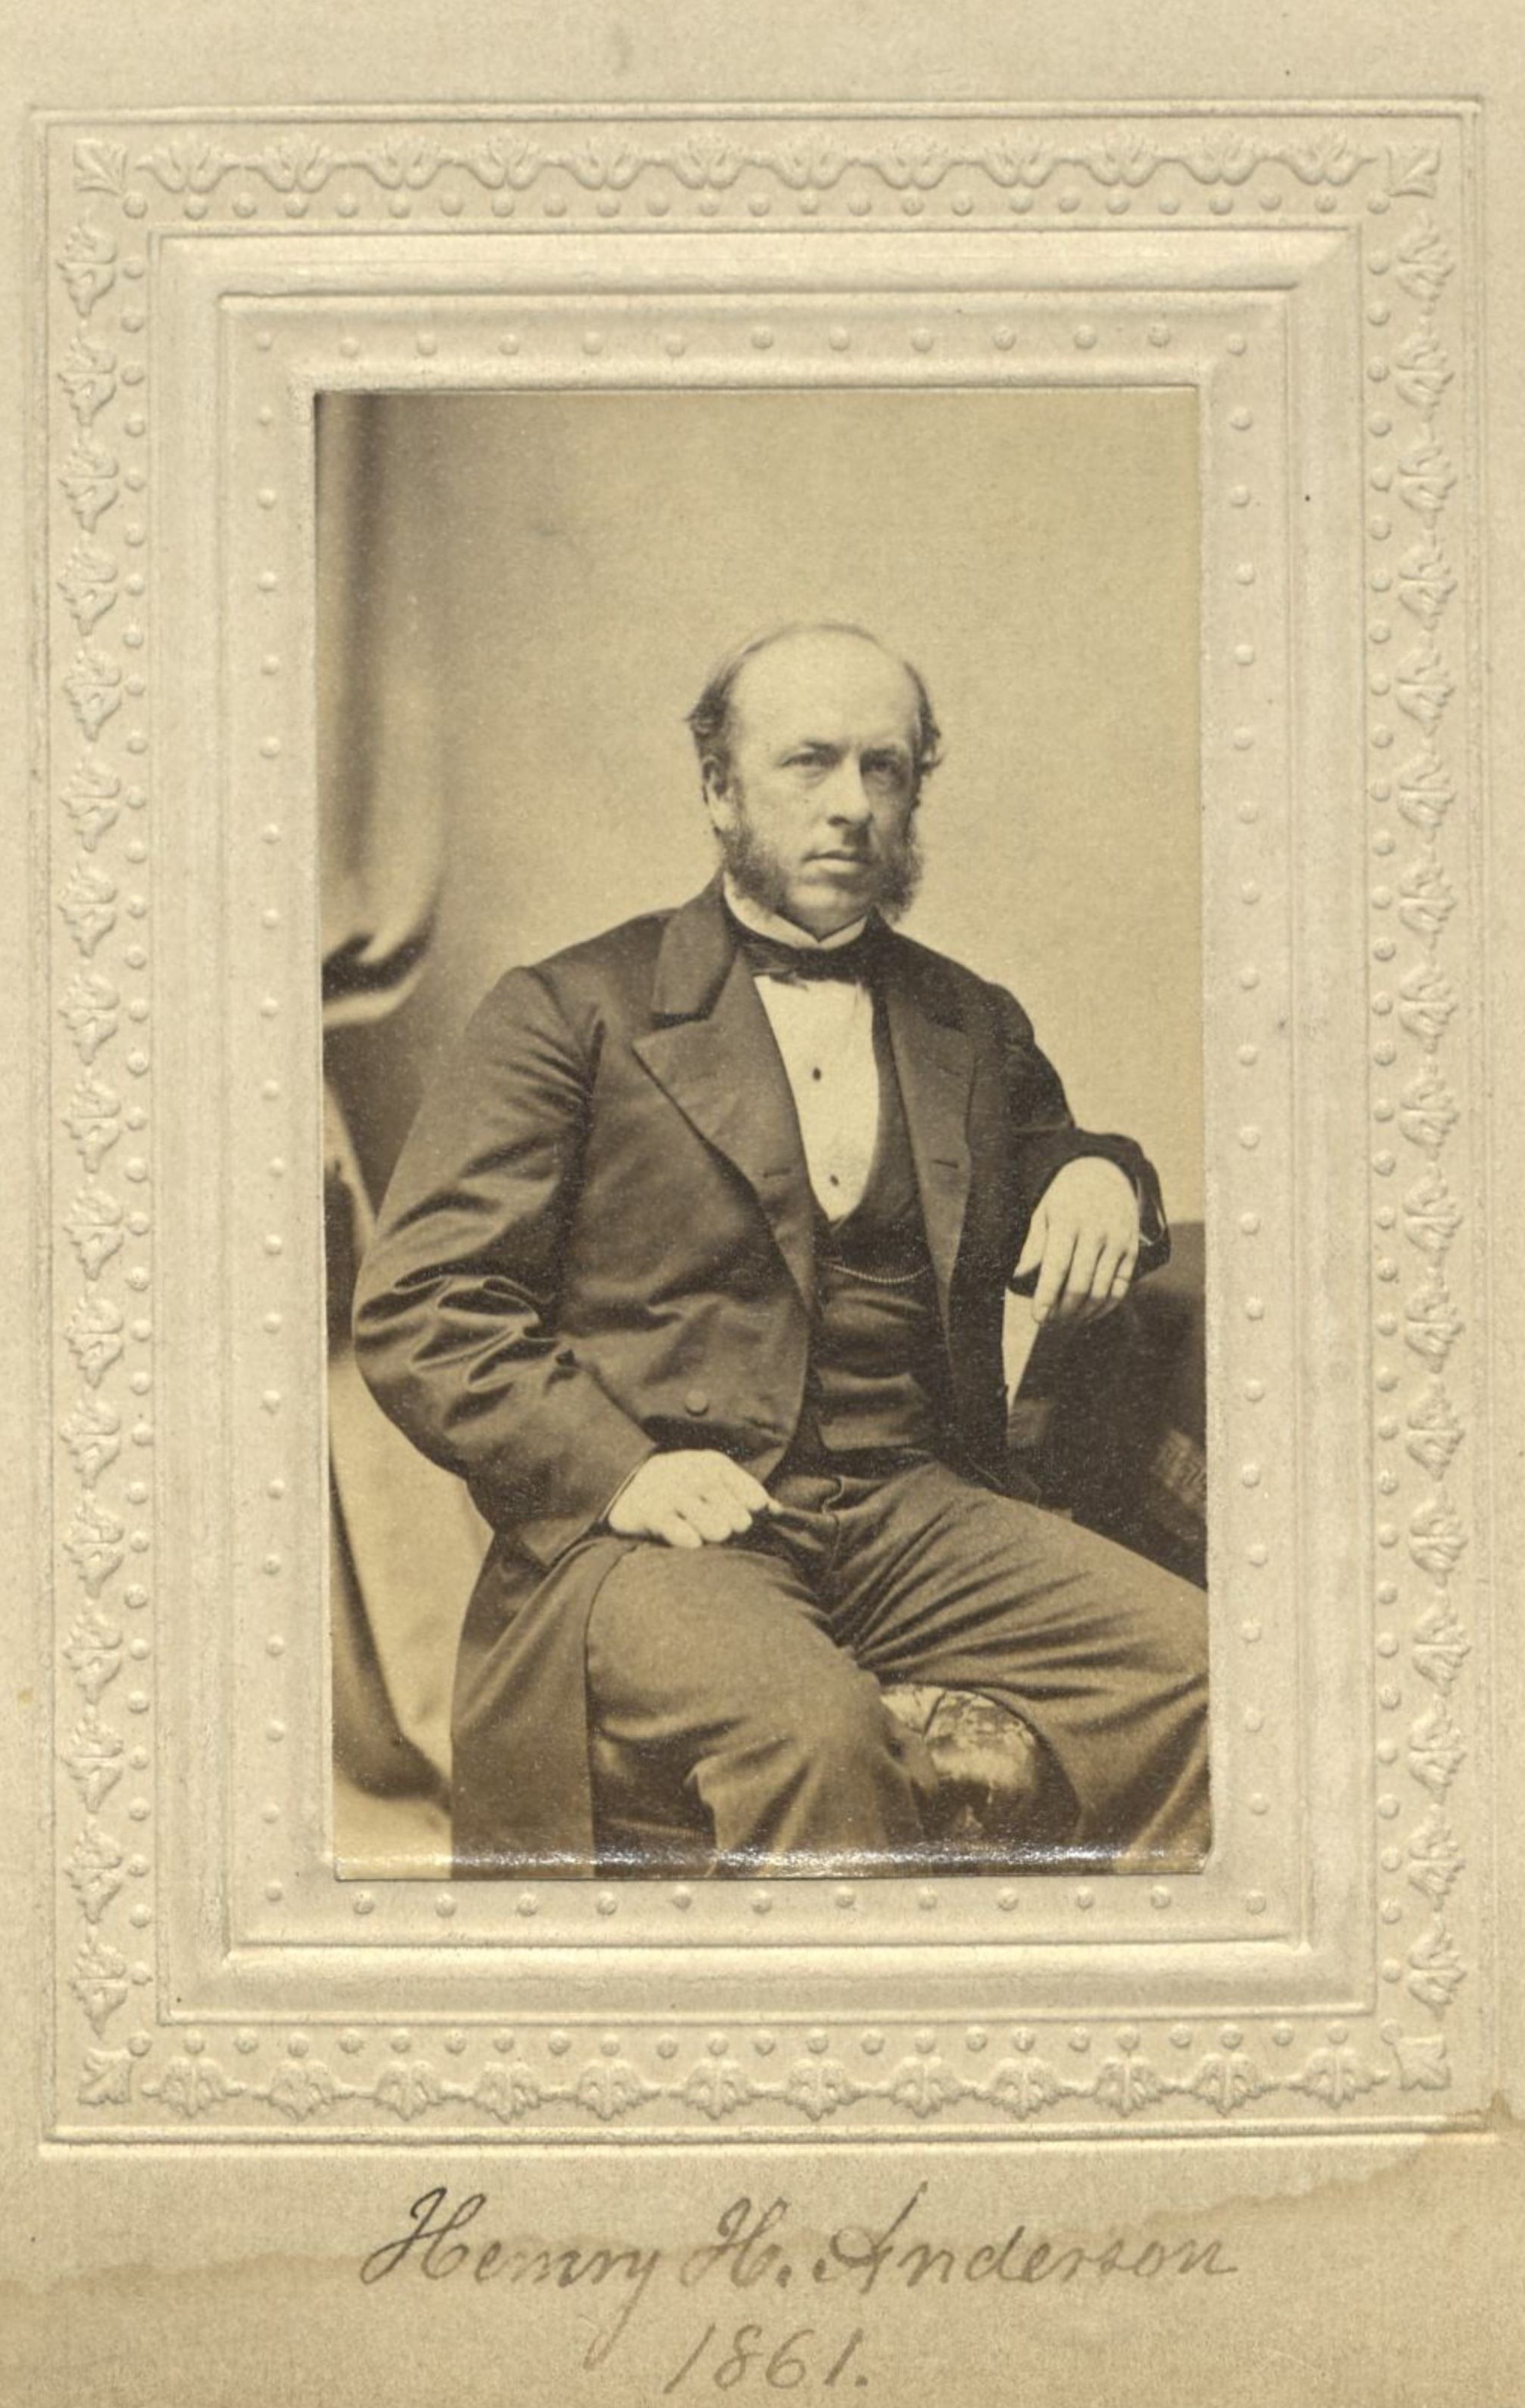 Member portrait of Henry H. Anderson